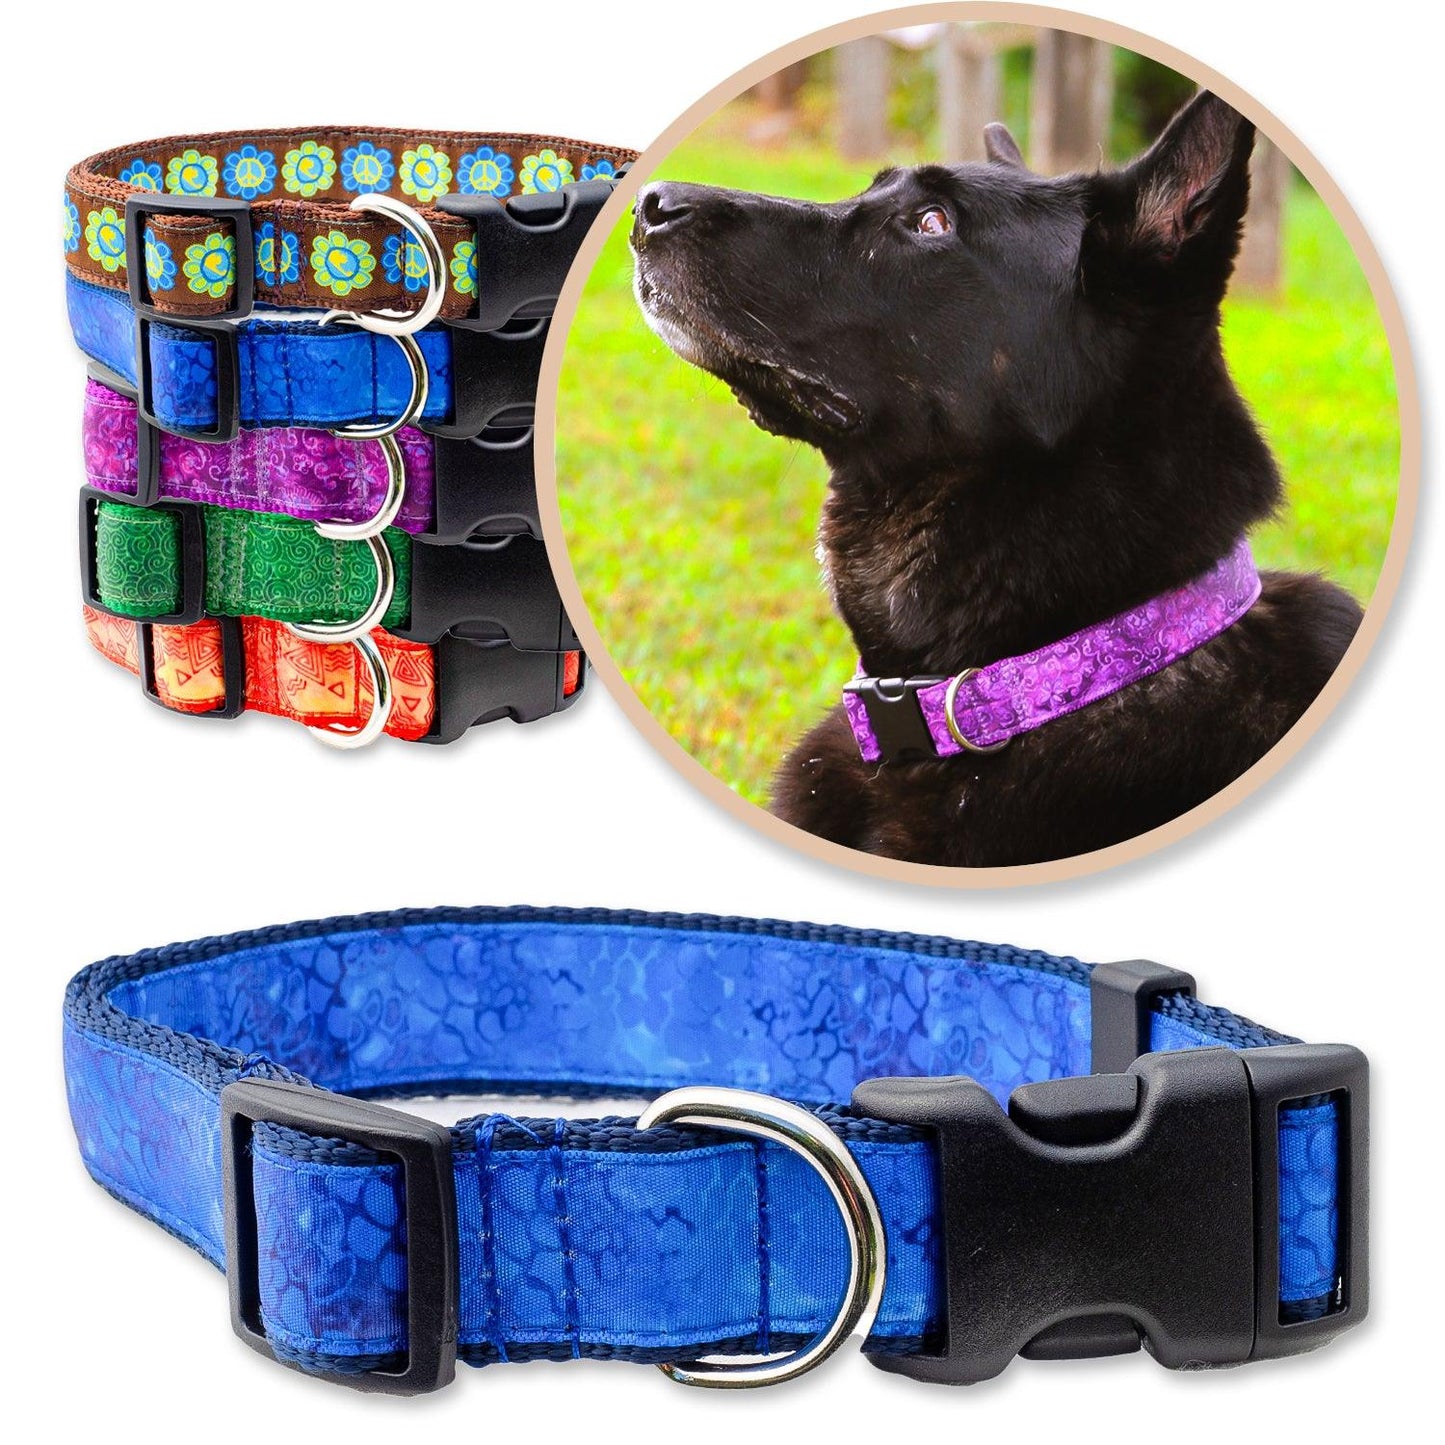 Blue batik inspired dog collar shown with a black dog